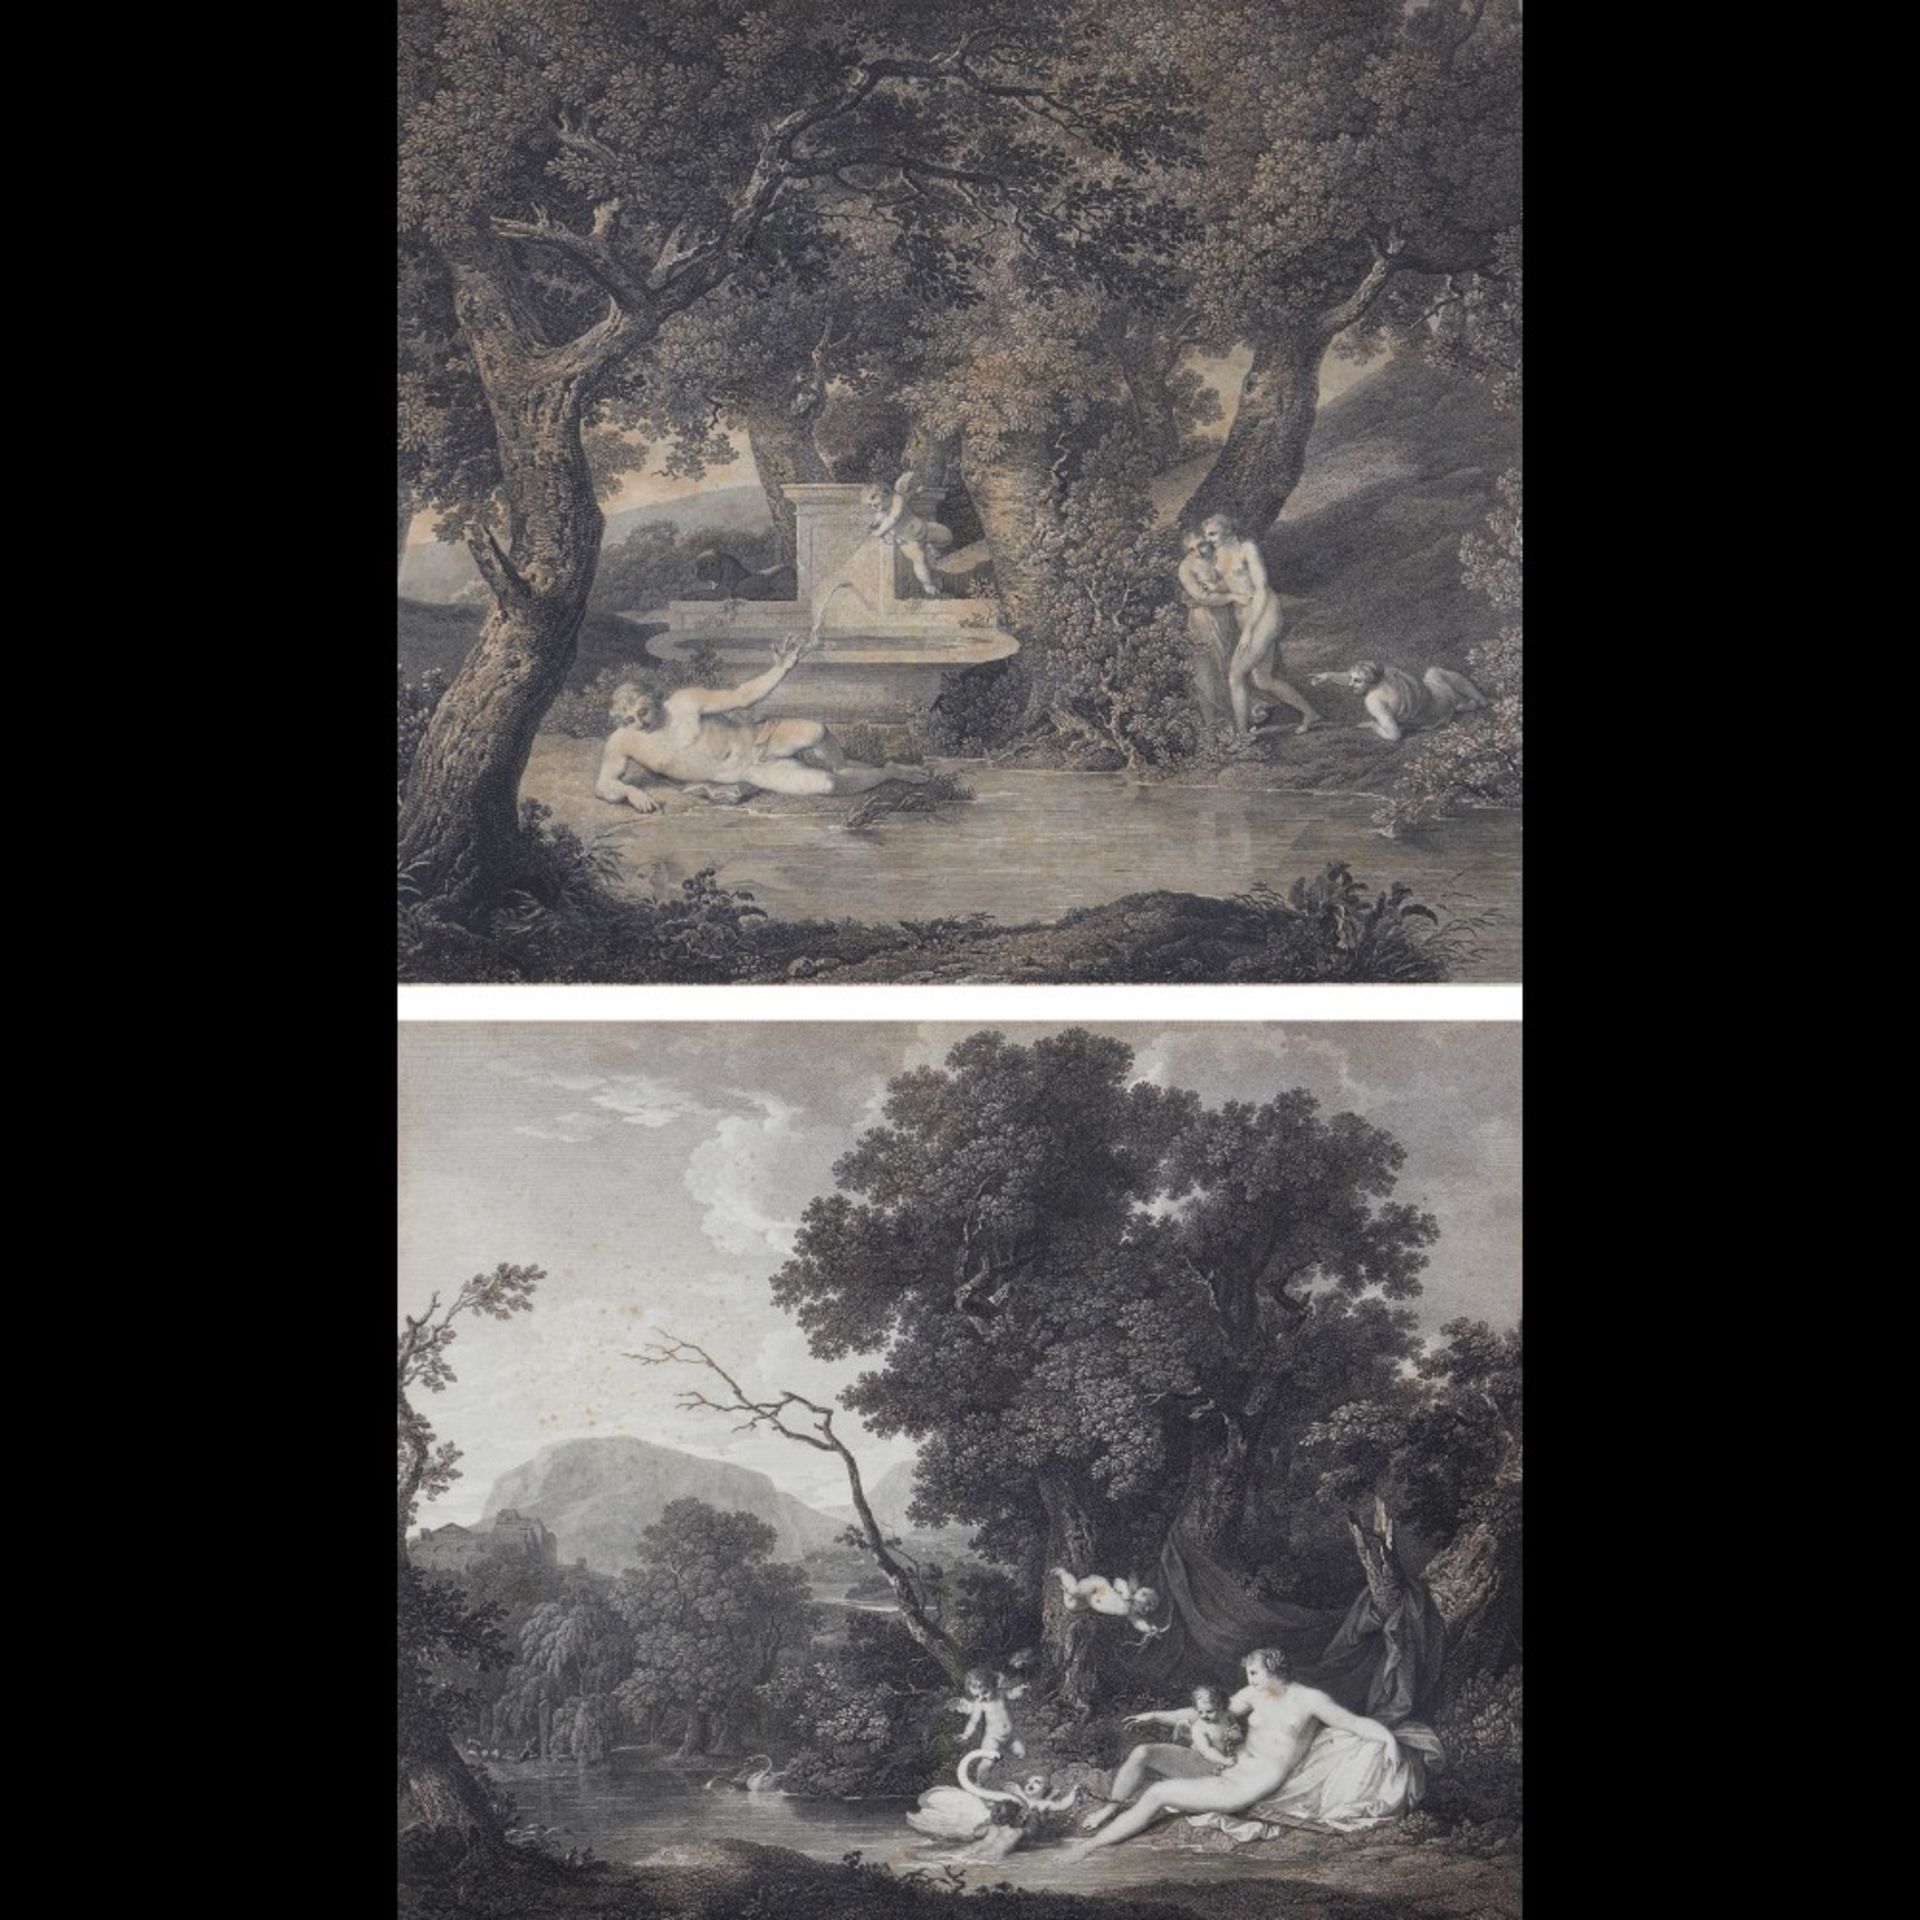 Francesco Bartolozzi (1725-1815) “Narcissus” and “Leda and the Swan”